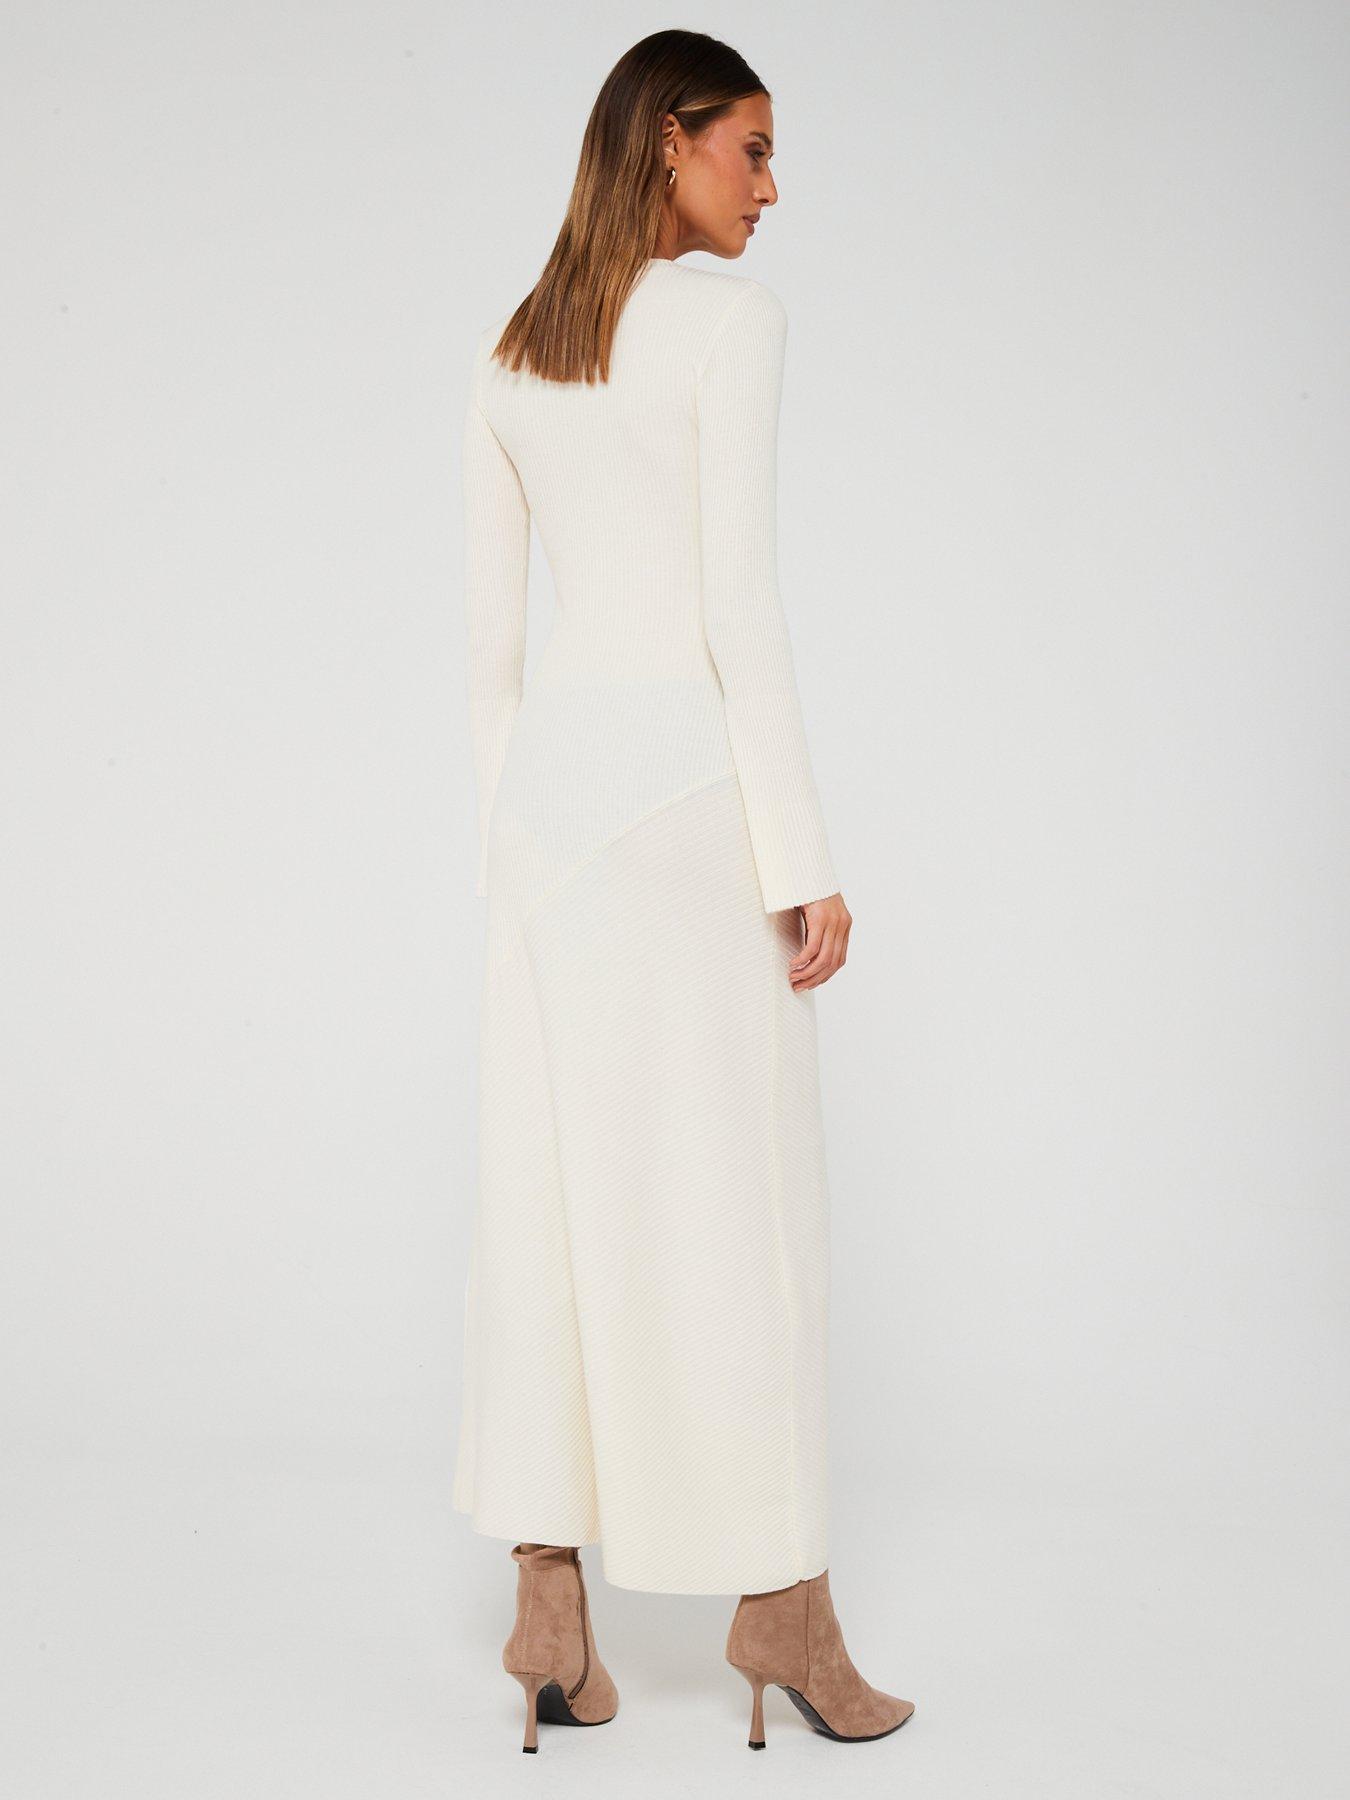 Sleeveless Corset Style Bodycon Dress - Cream